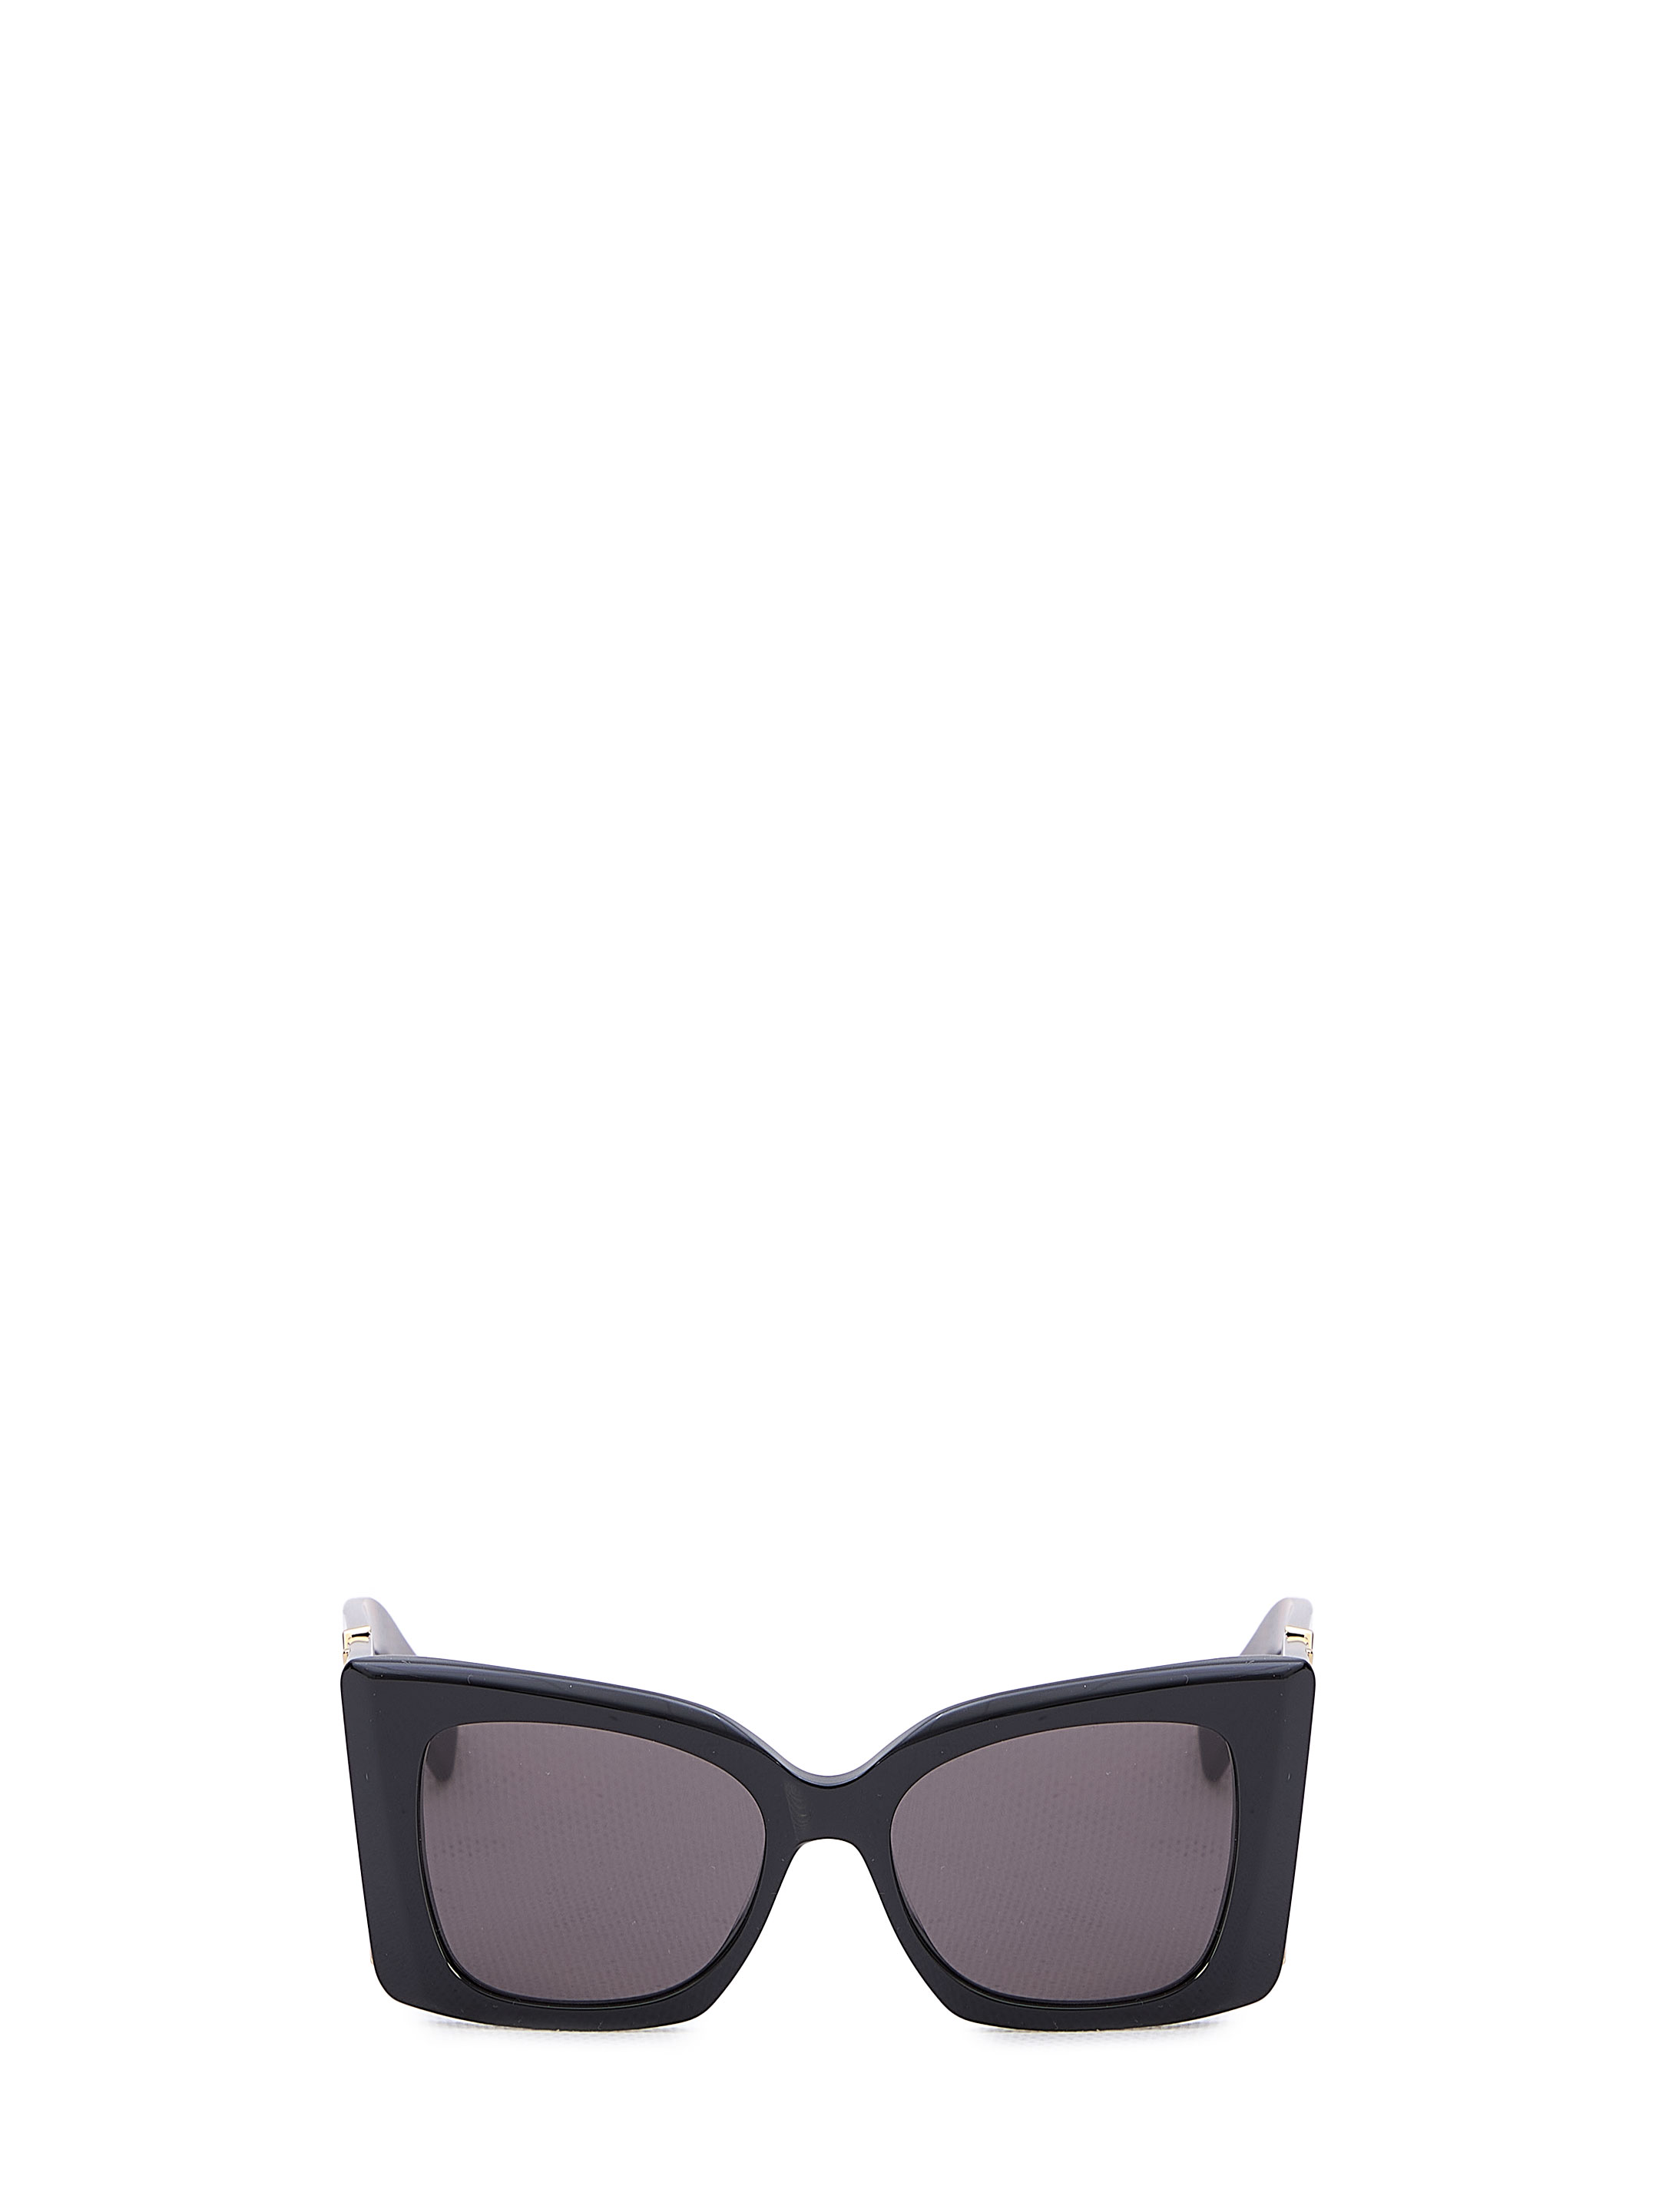 SL M119 Blaze cat-eye sunglasses